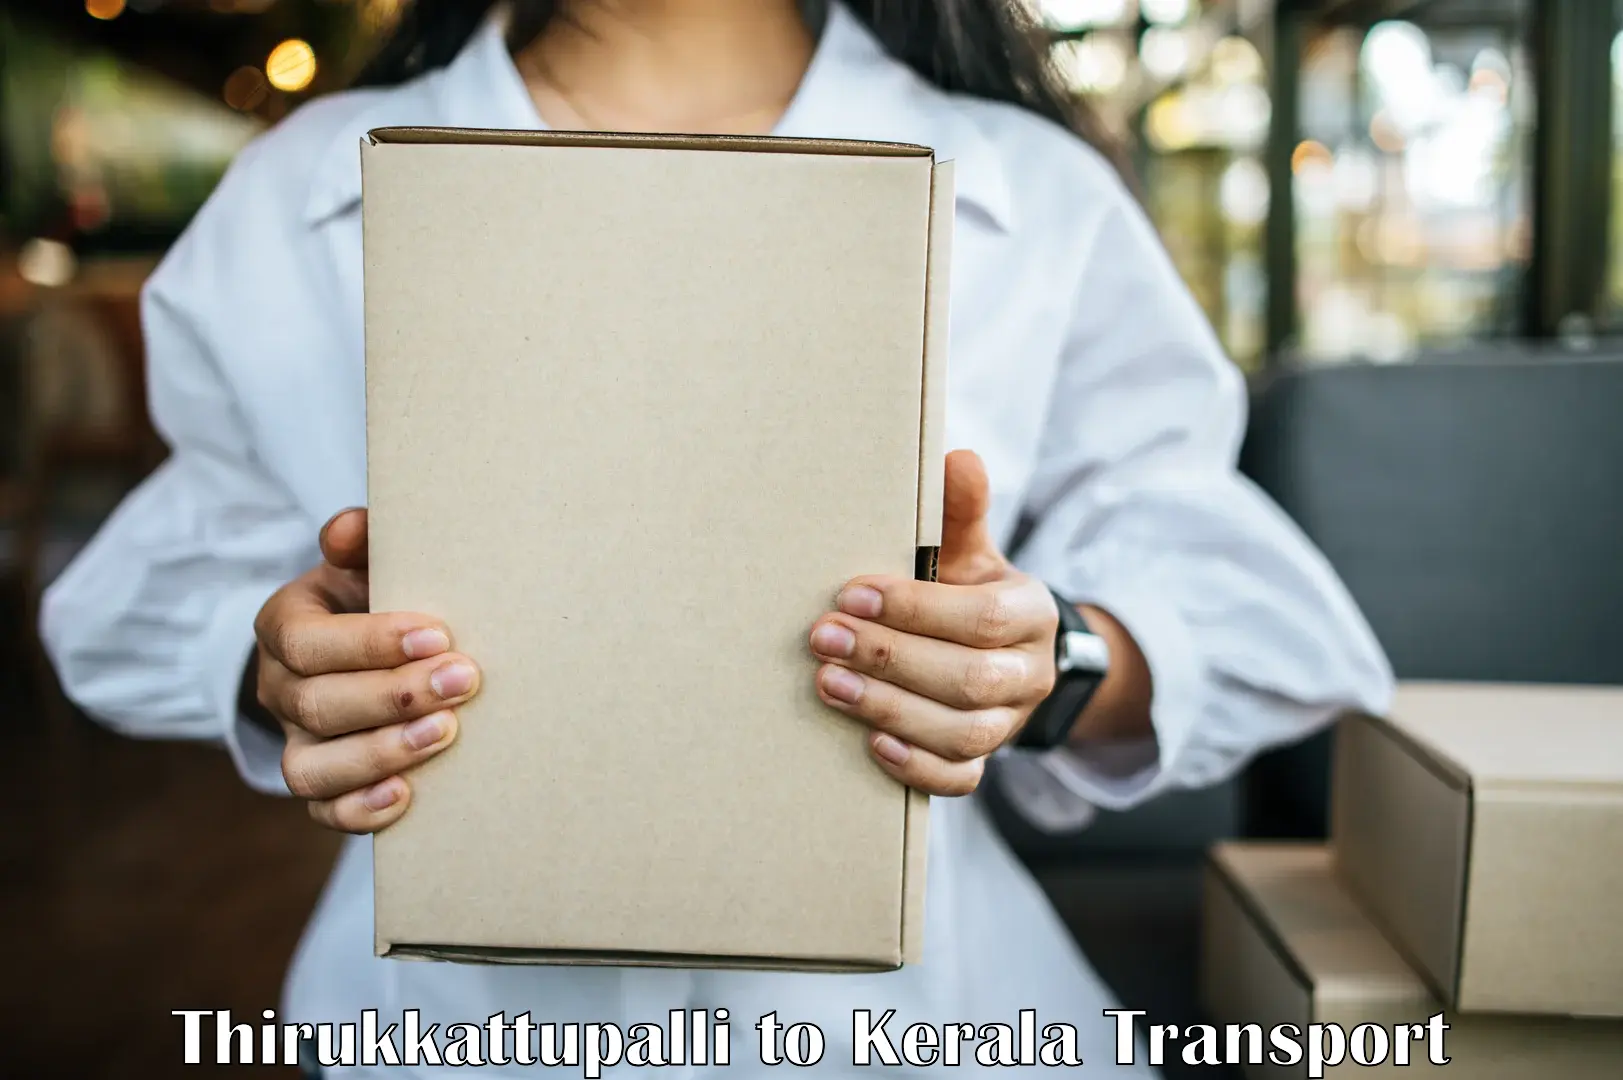 Daily transport service Thirukkattupalli to Koothattukulam